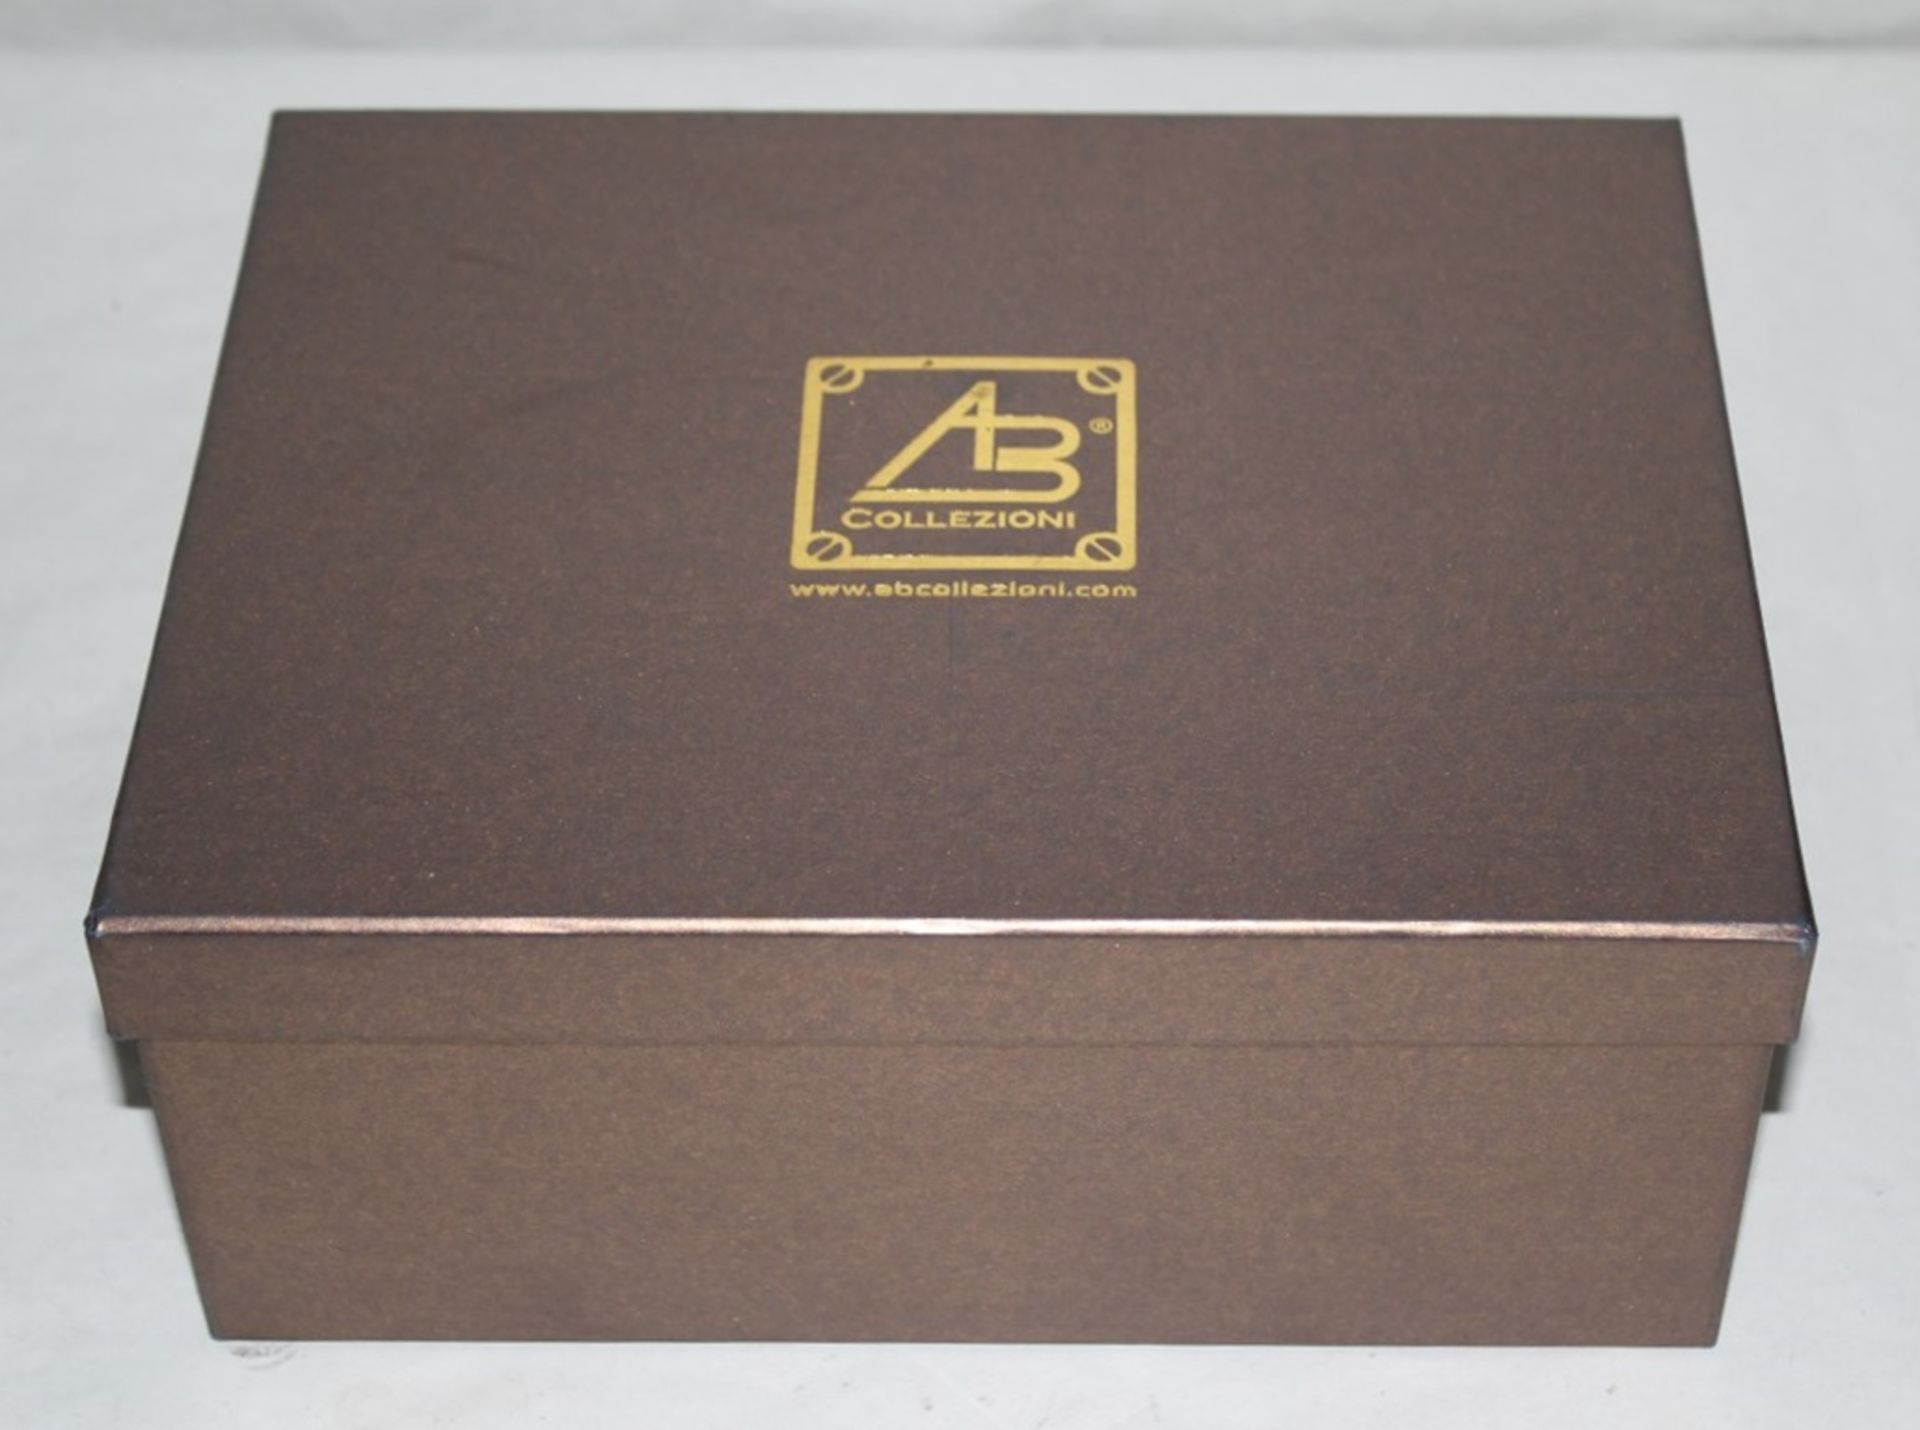 1 x "AB Collezioni" Italian Luxury Watch Box (34043) - Ref LT149  – Genuine Leather With 6 - Image 4 of 4